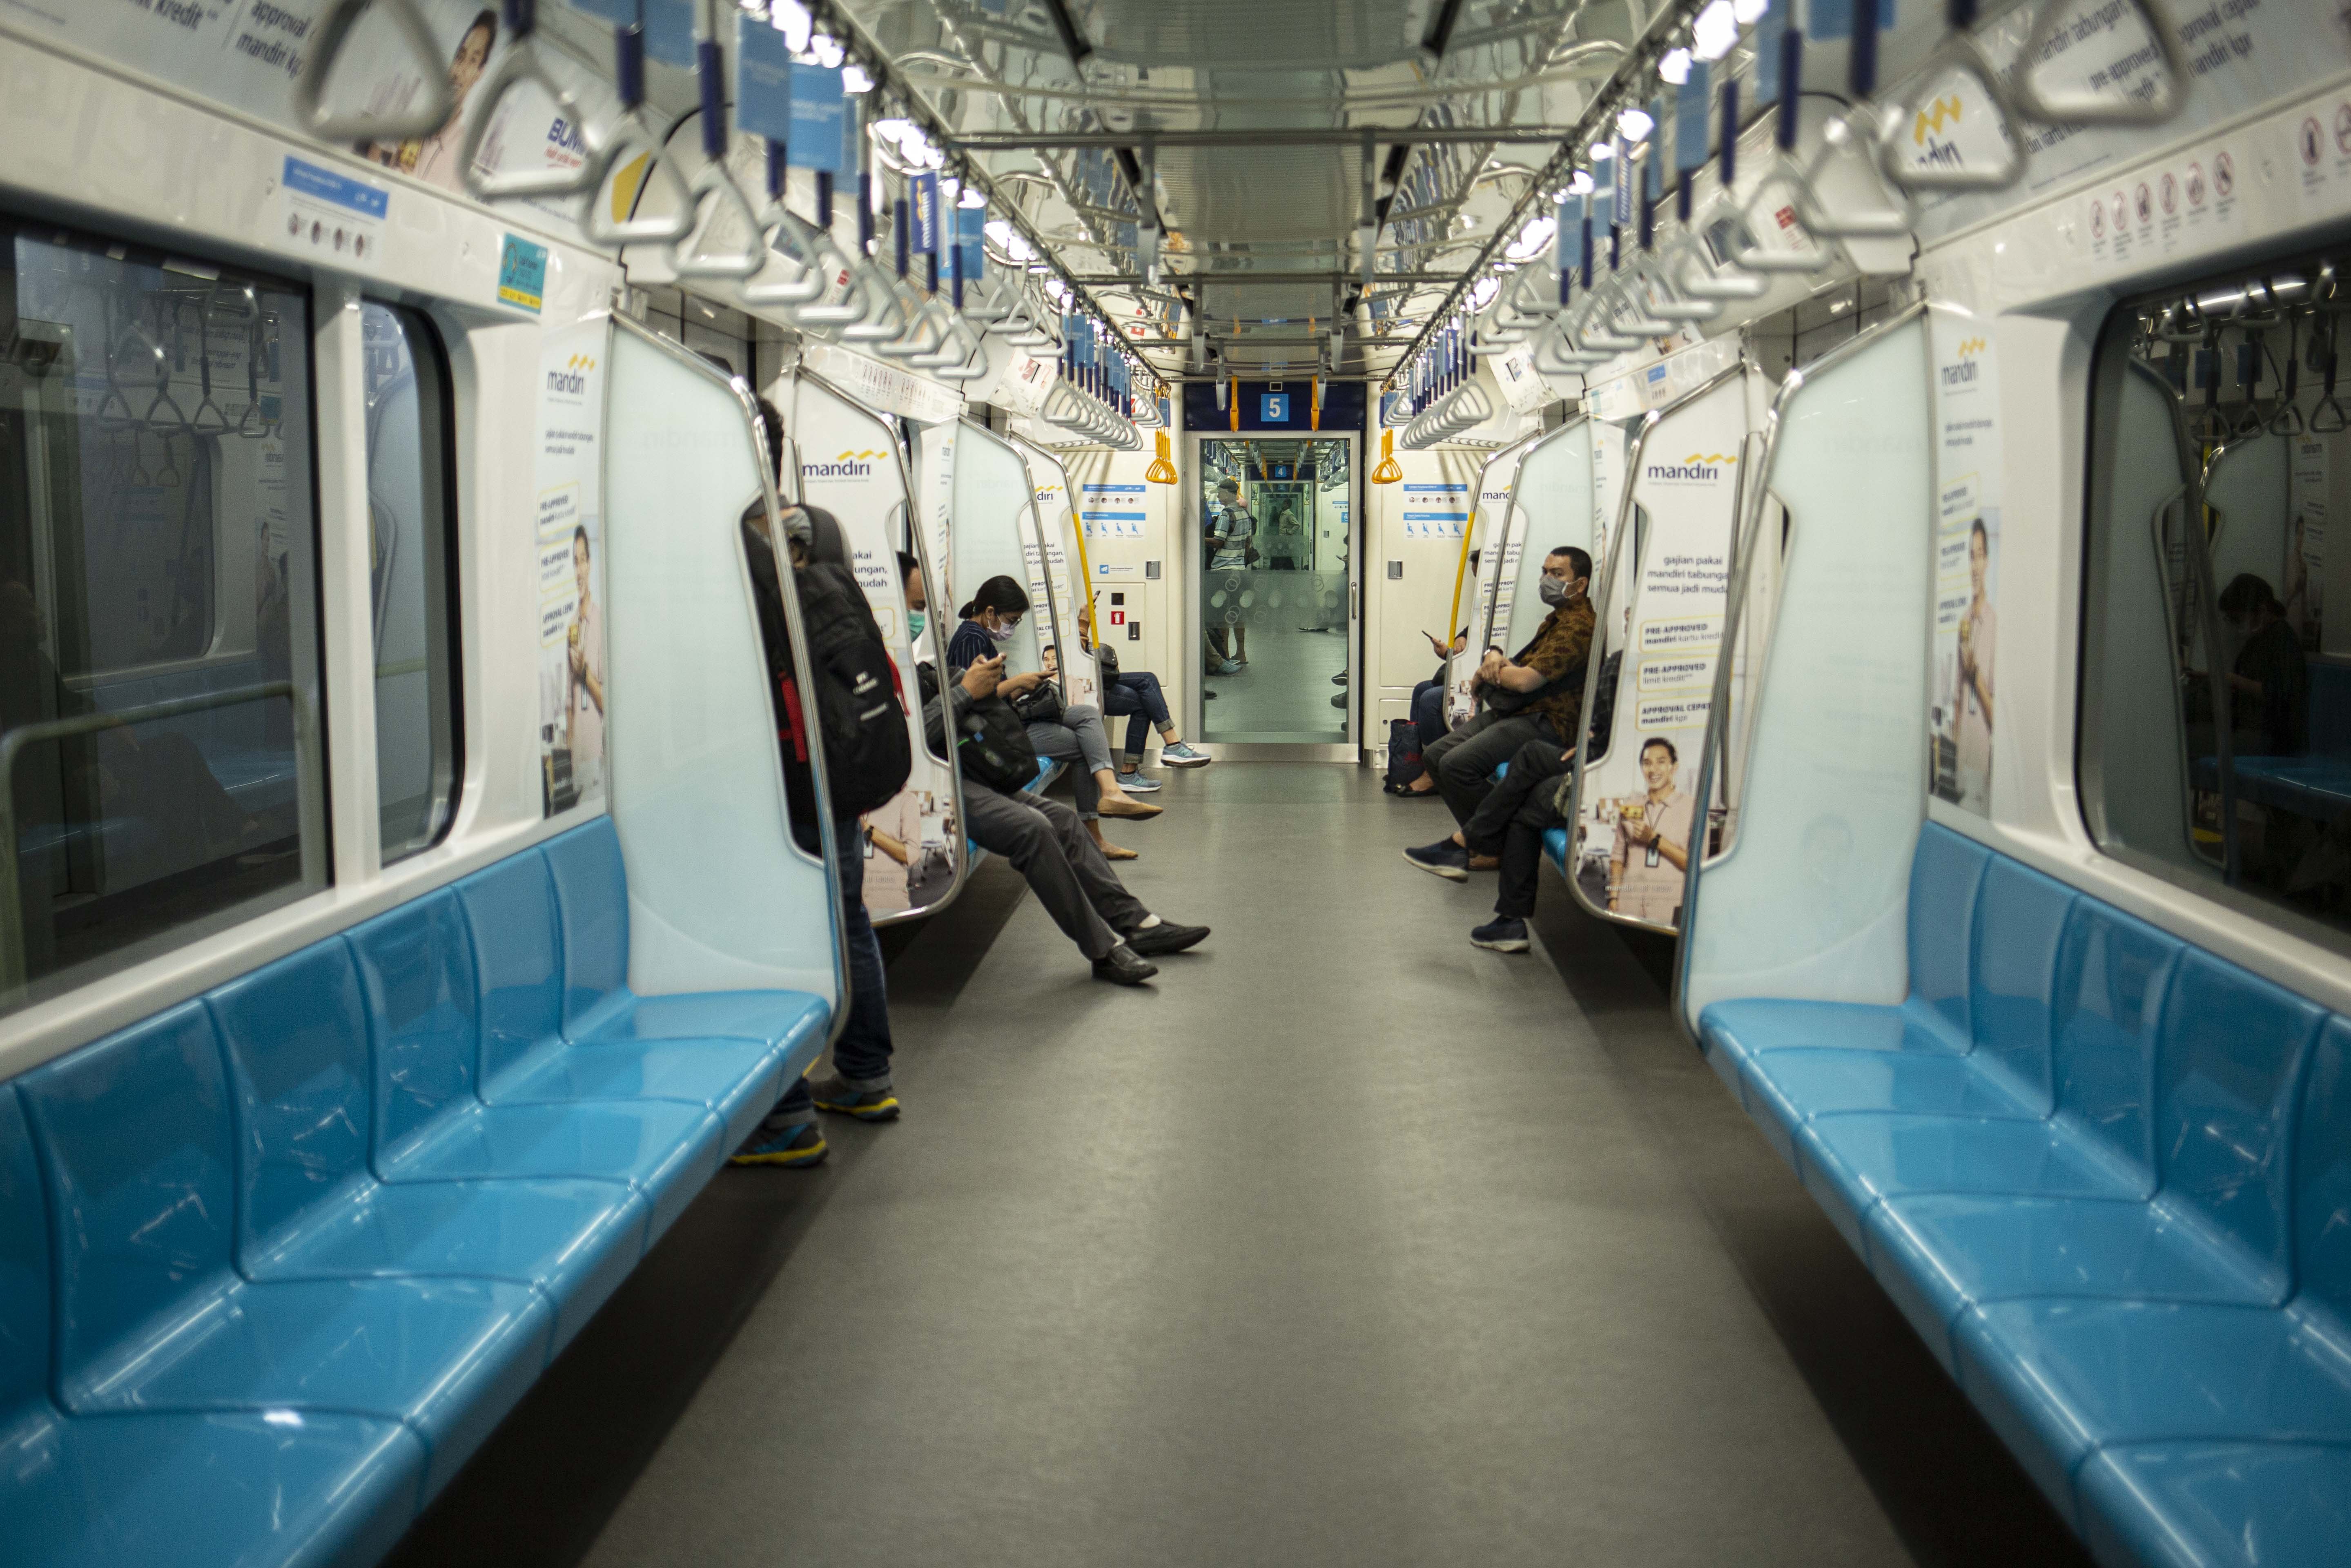 Warga menaiki MRT di Stasiun Bunderan HI. MRT membatasi waktu oprasional dan jumlah penumpang satu gerbongnya.